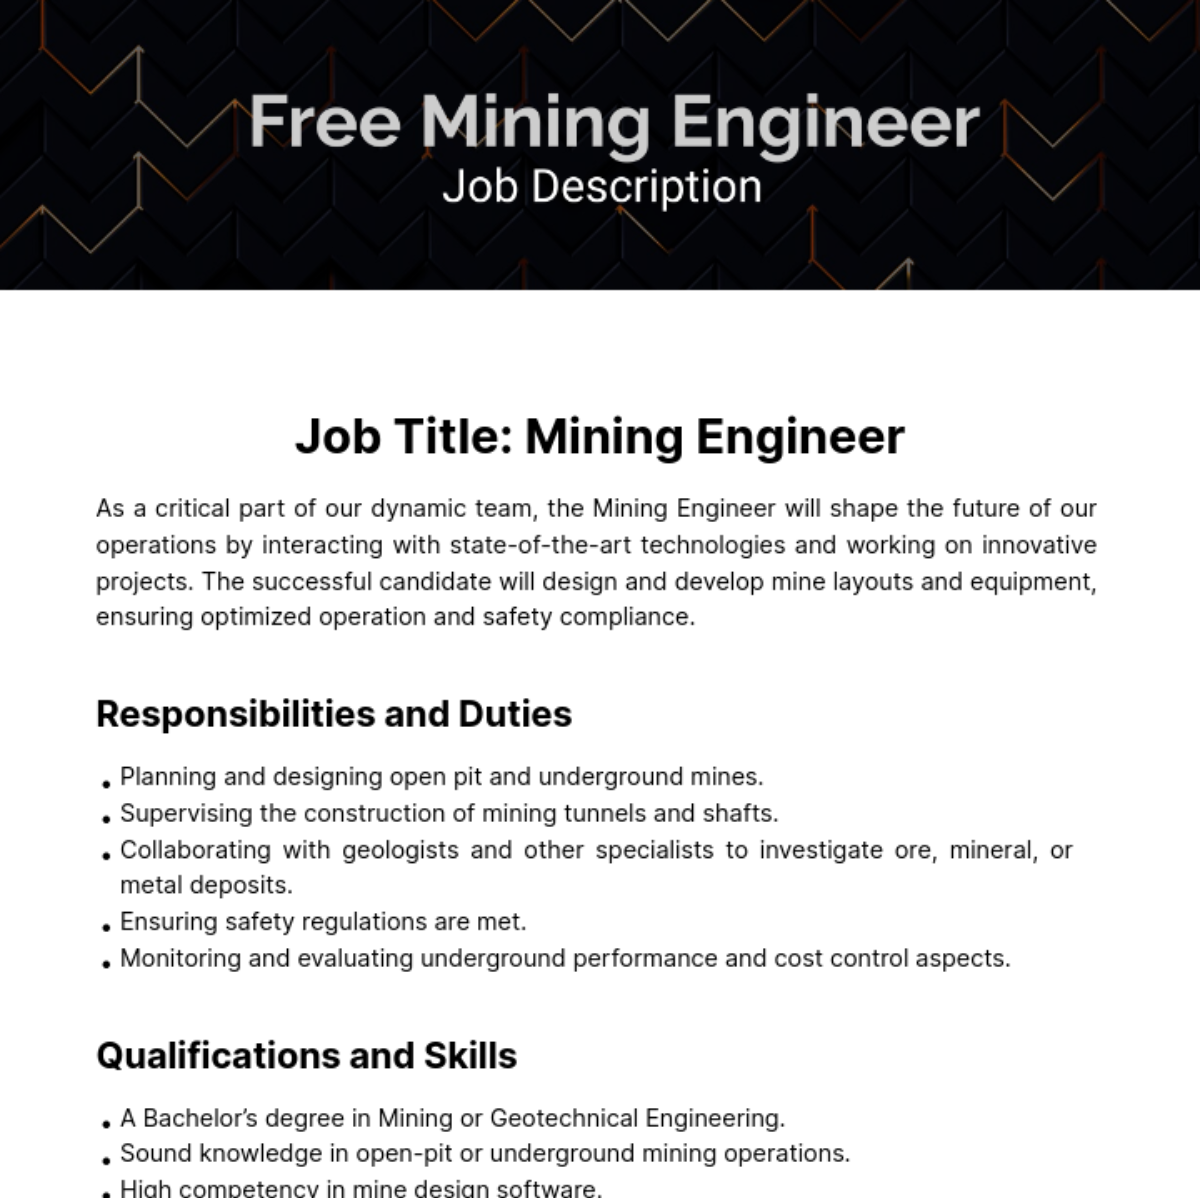 Free Mining Engineer Job Description Template